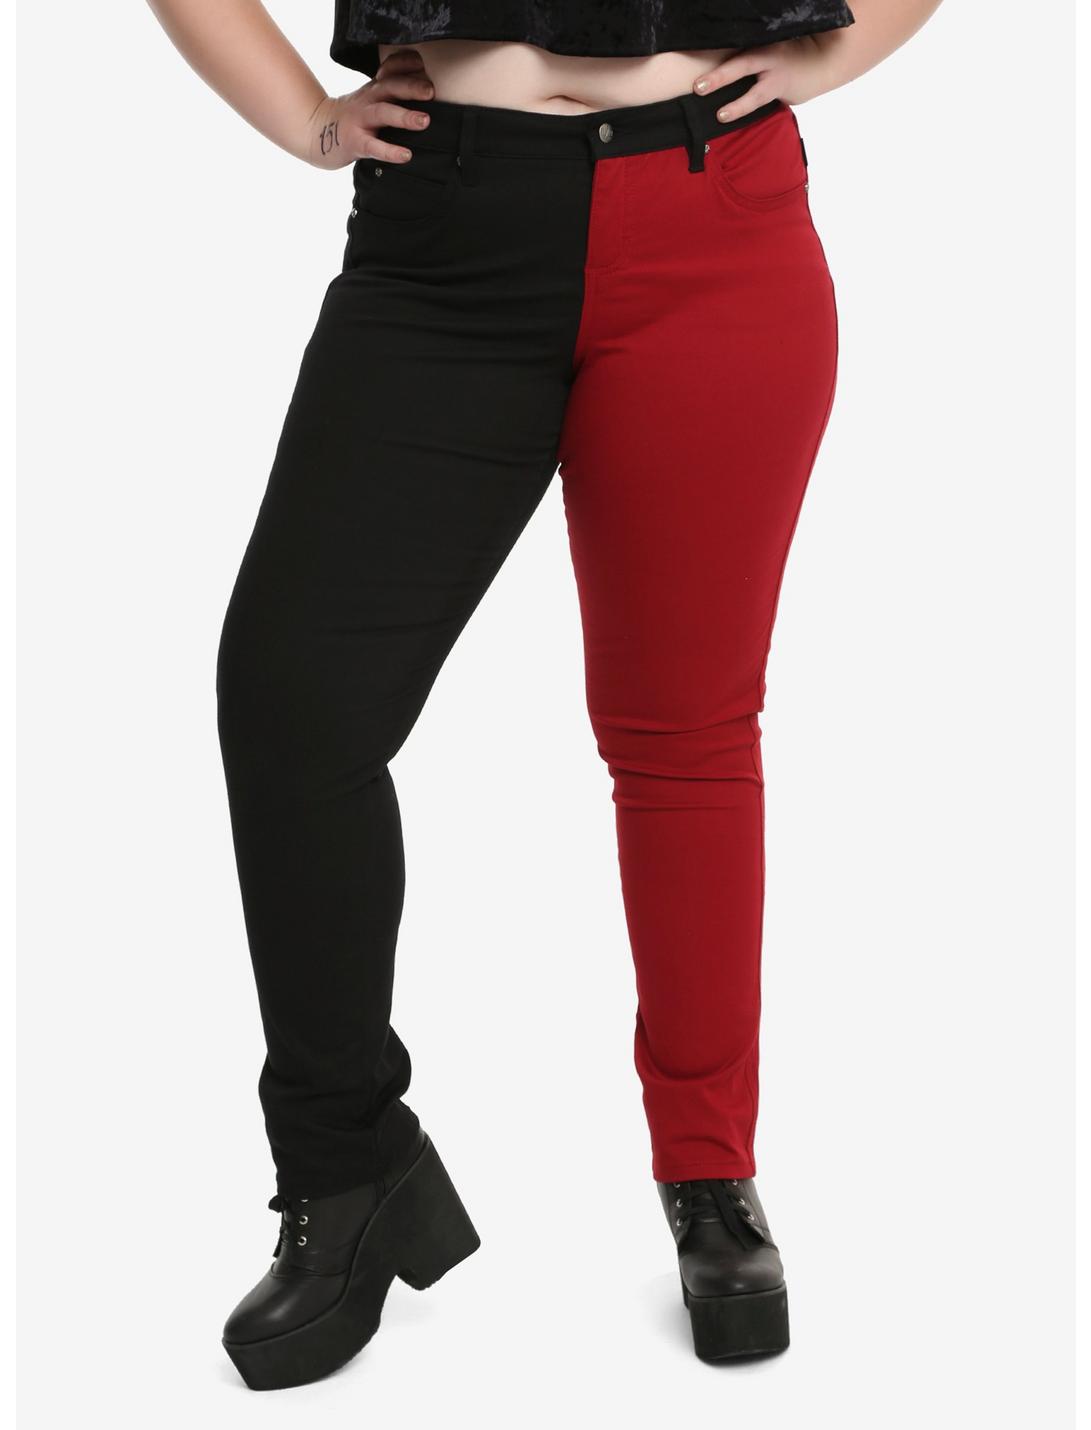 Tripp Red & Black Split Leg Skinny Jeans Plus Size